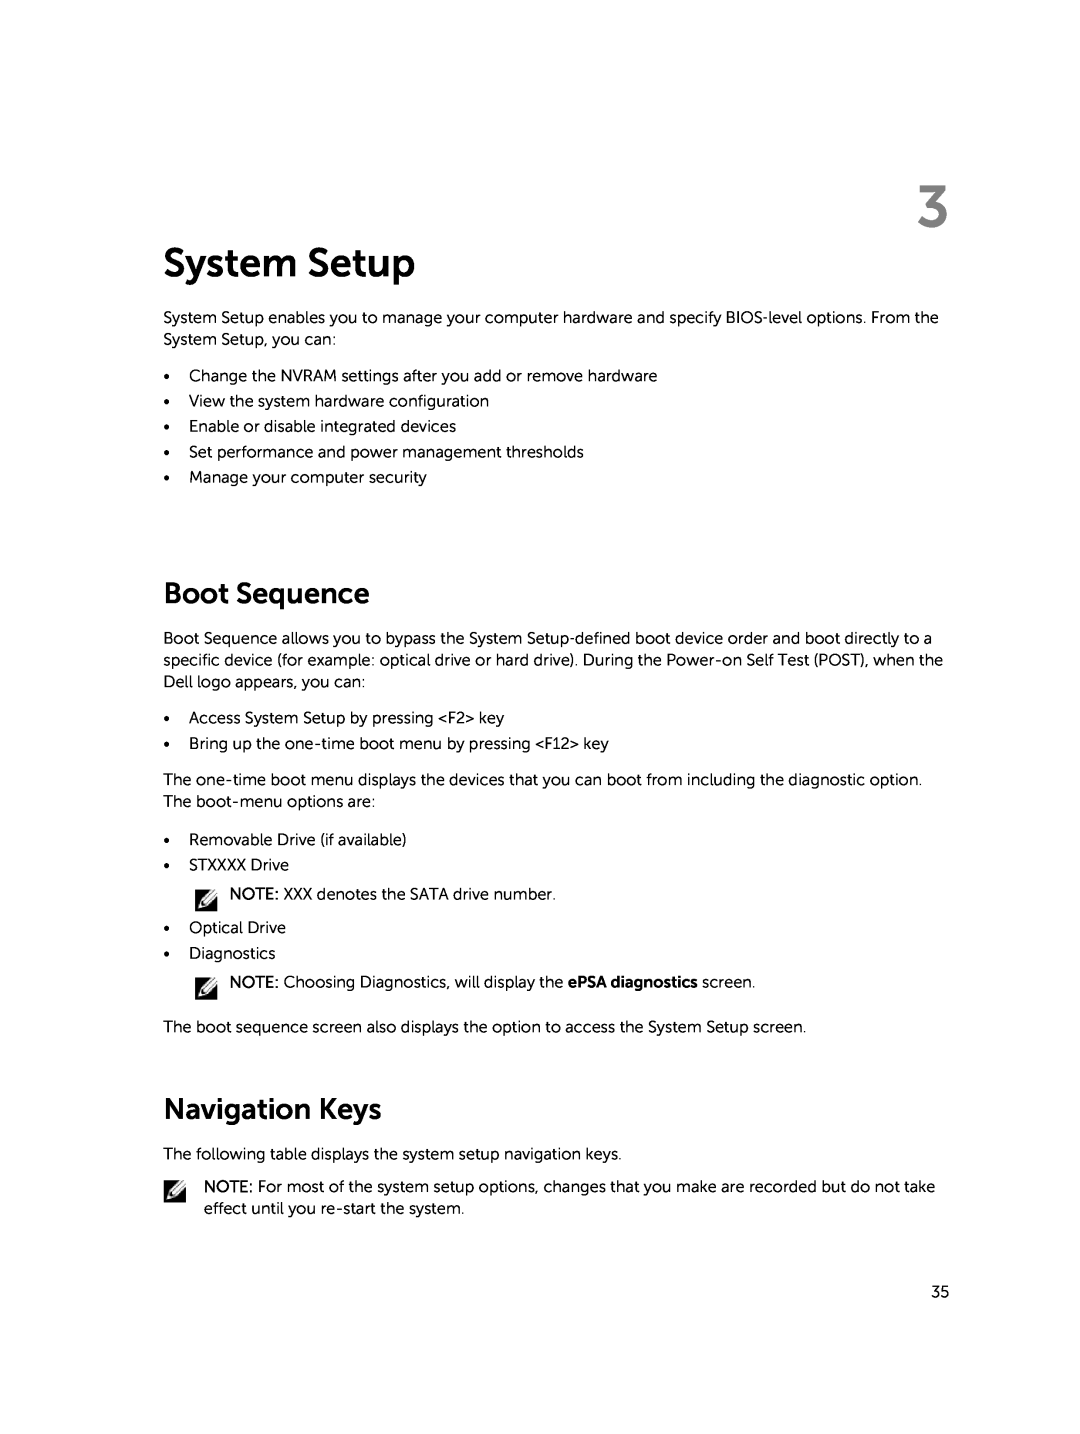 Dell P45F001 owner manual System Setup, Boot Sequence, Navigation Keys 